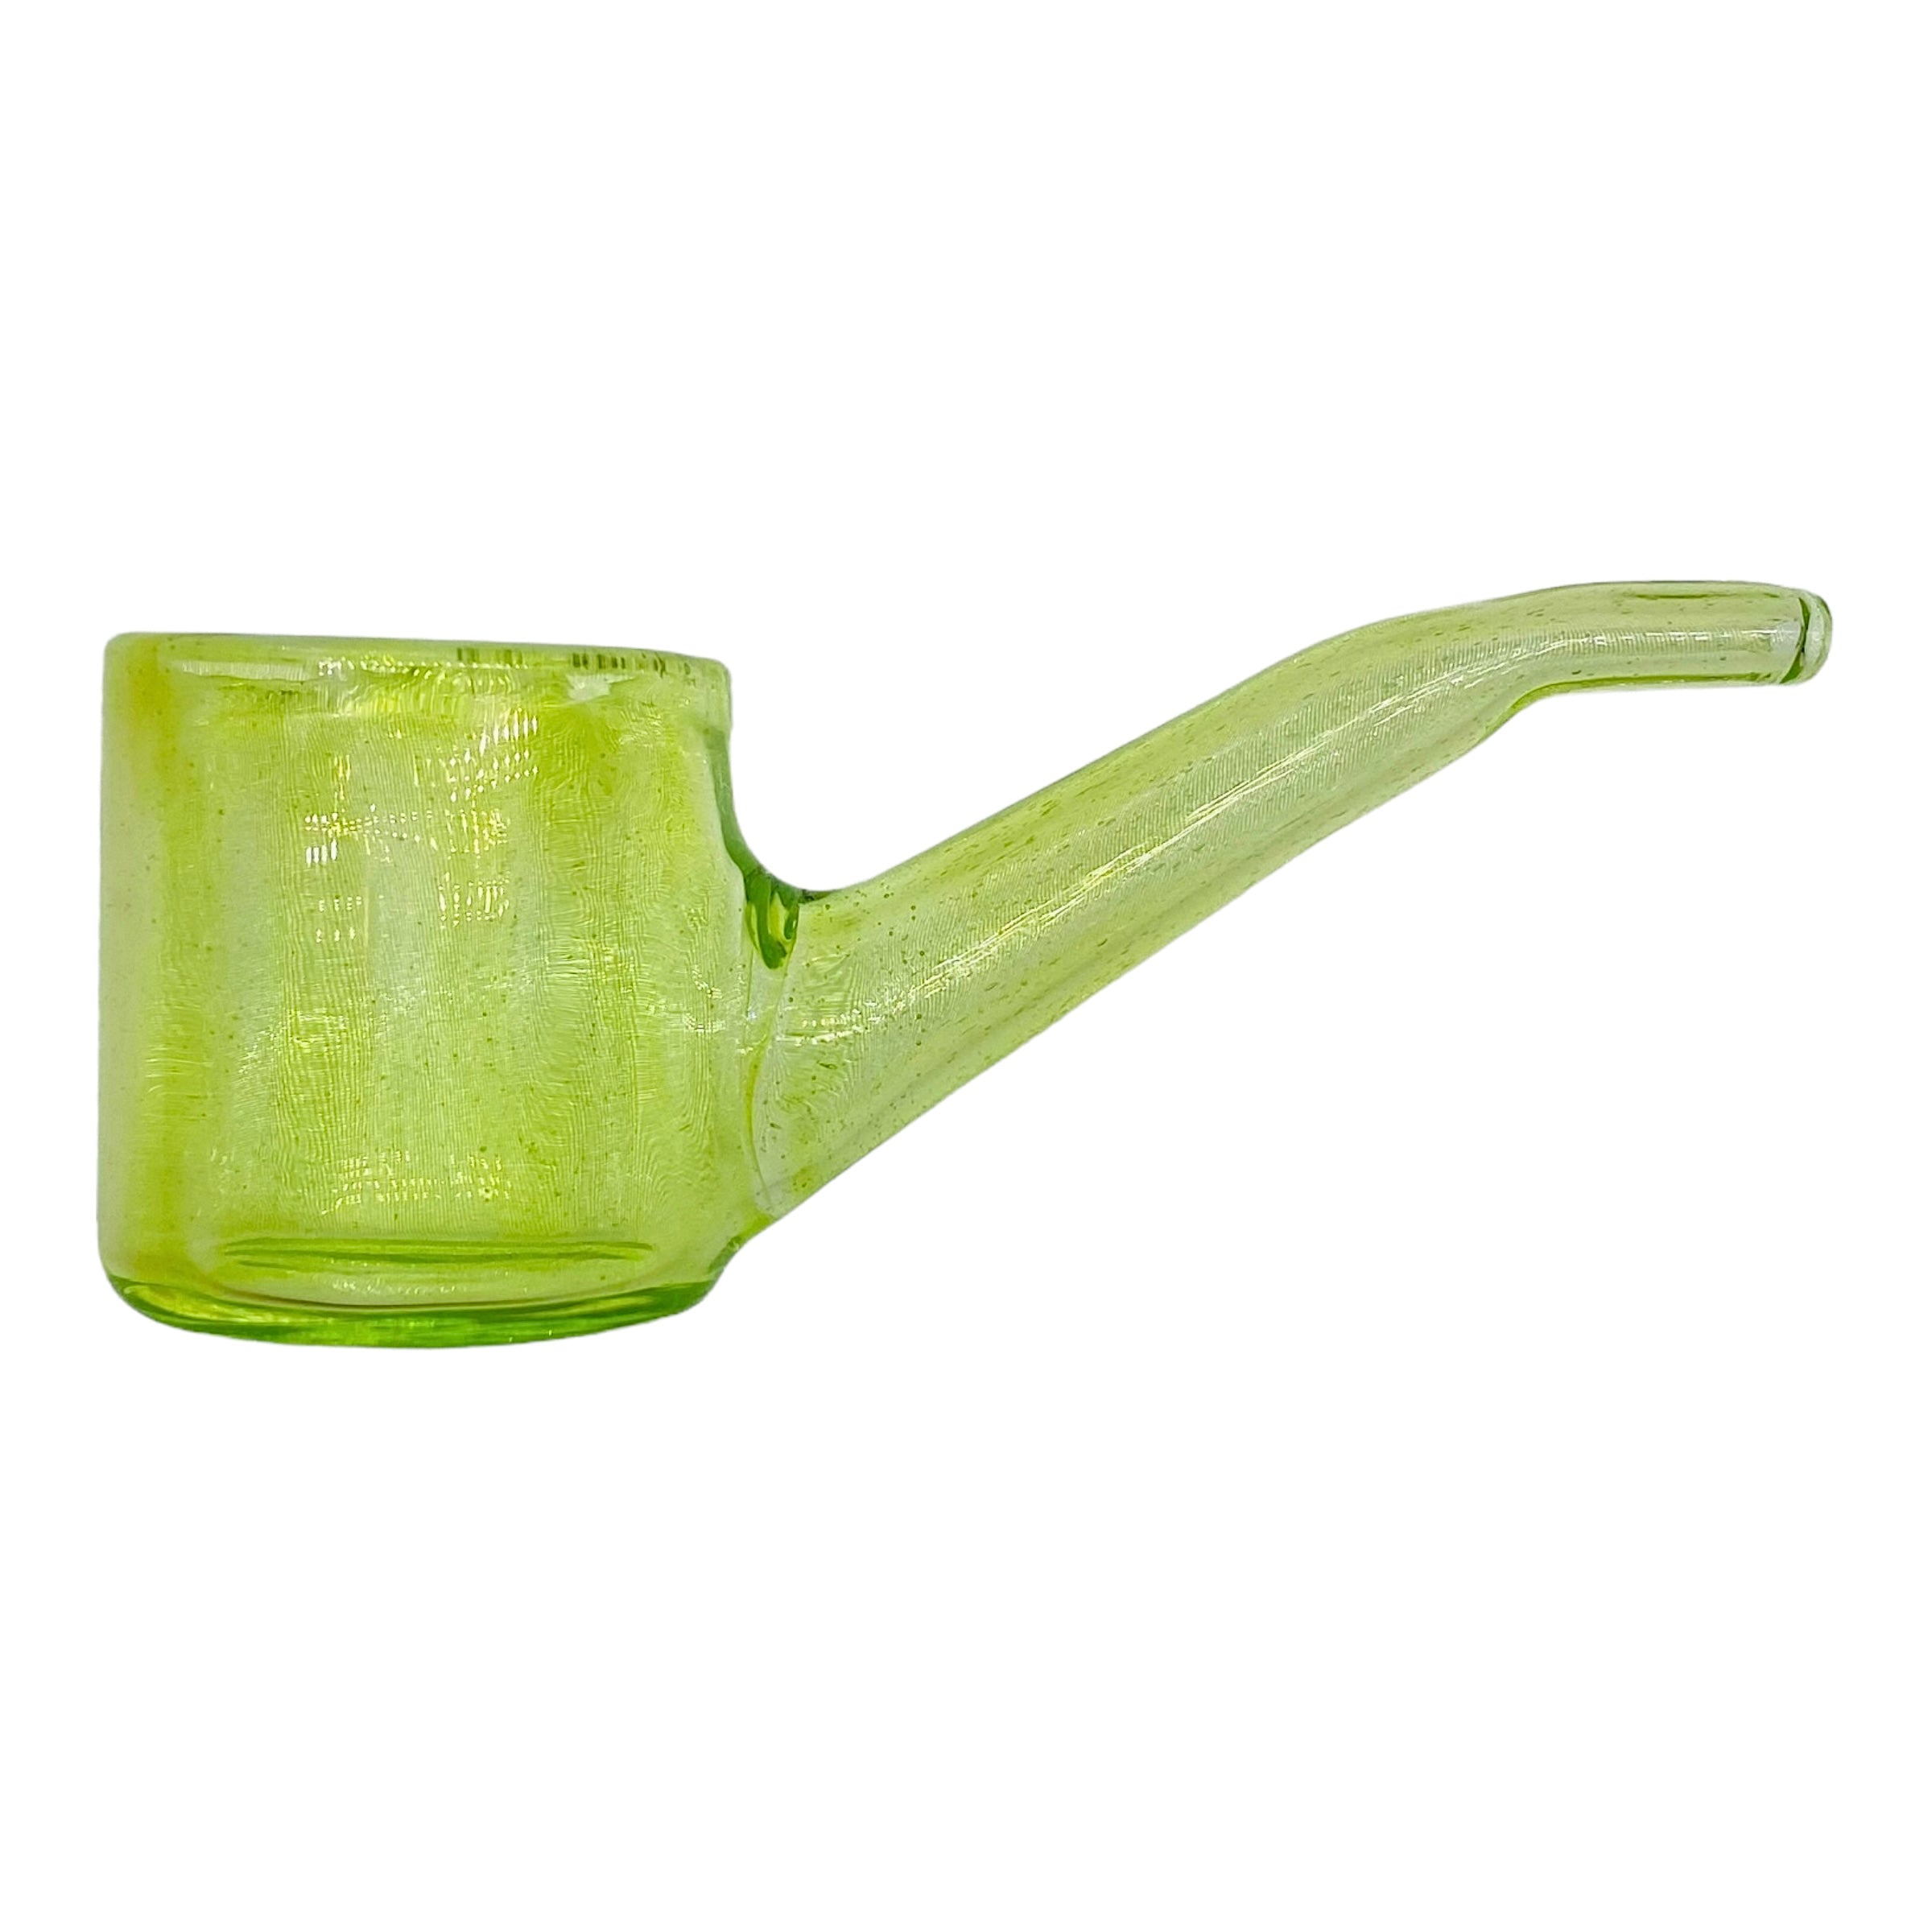 Daniel's Glass Art - Puffco Proxy Glass Attachment - Translucent Green